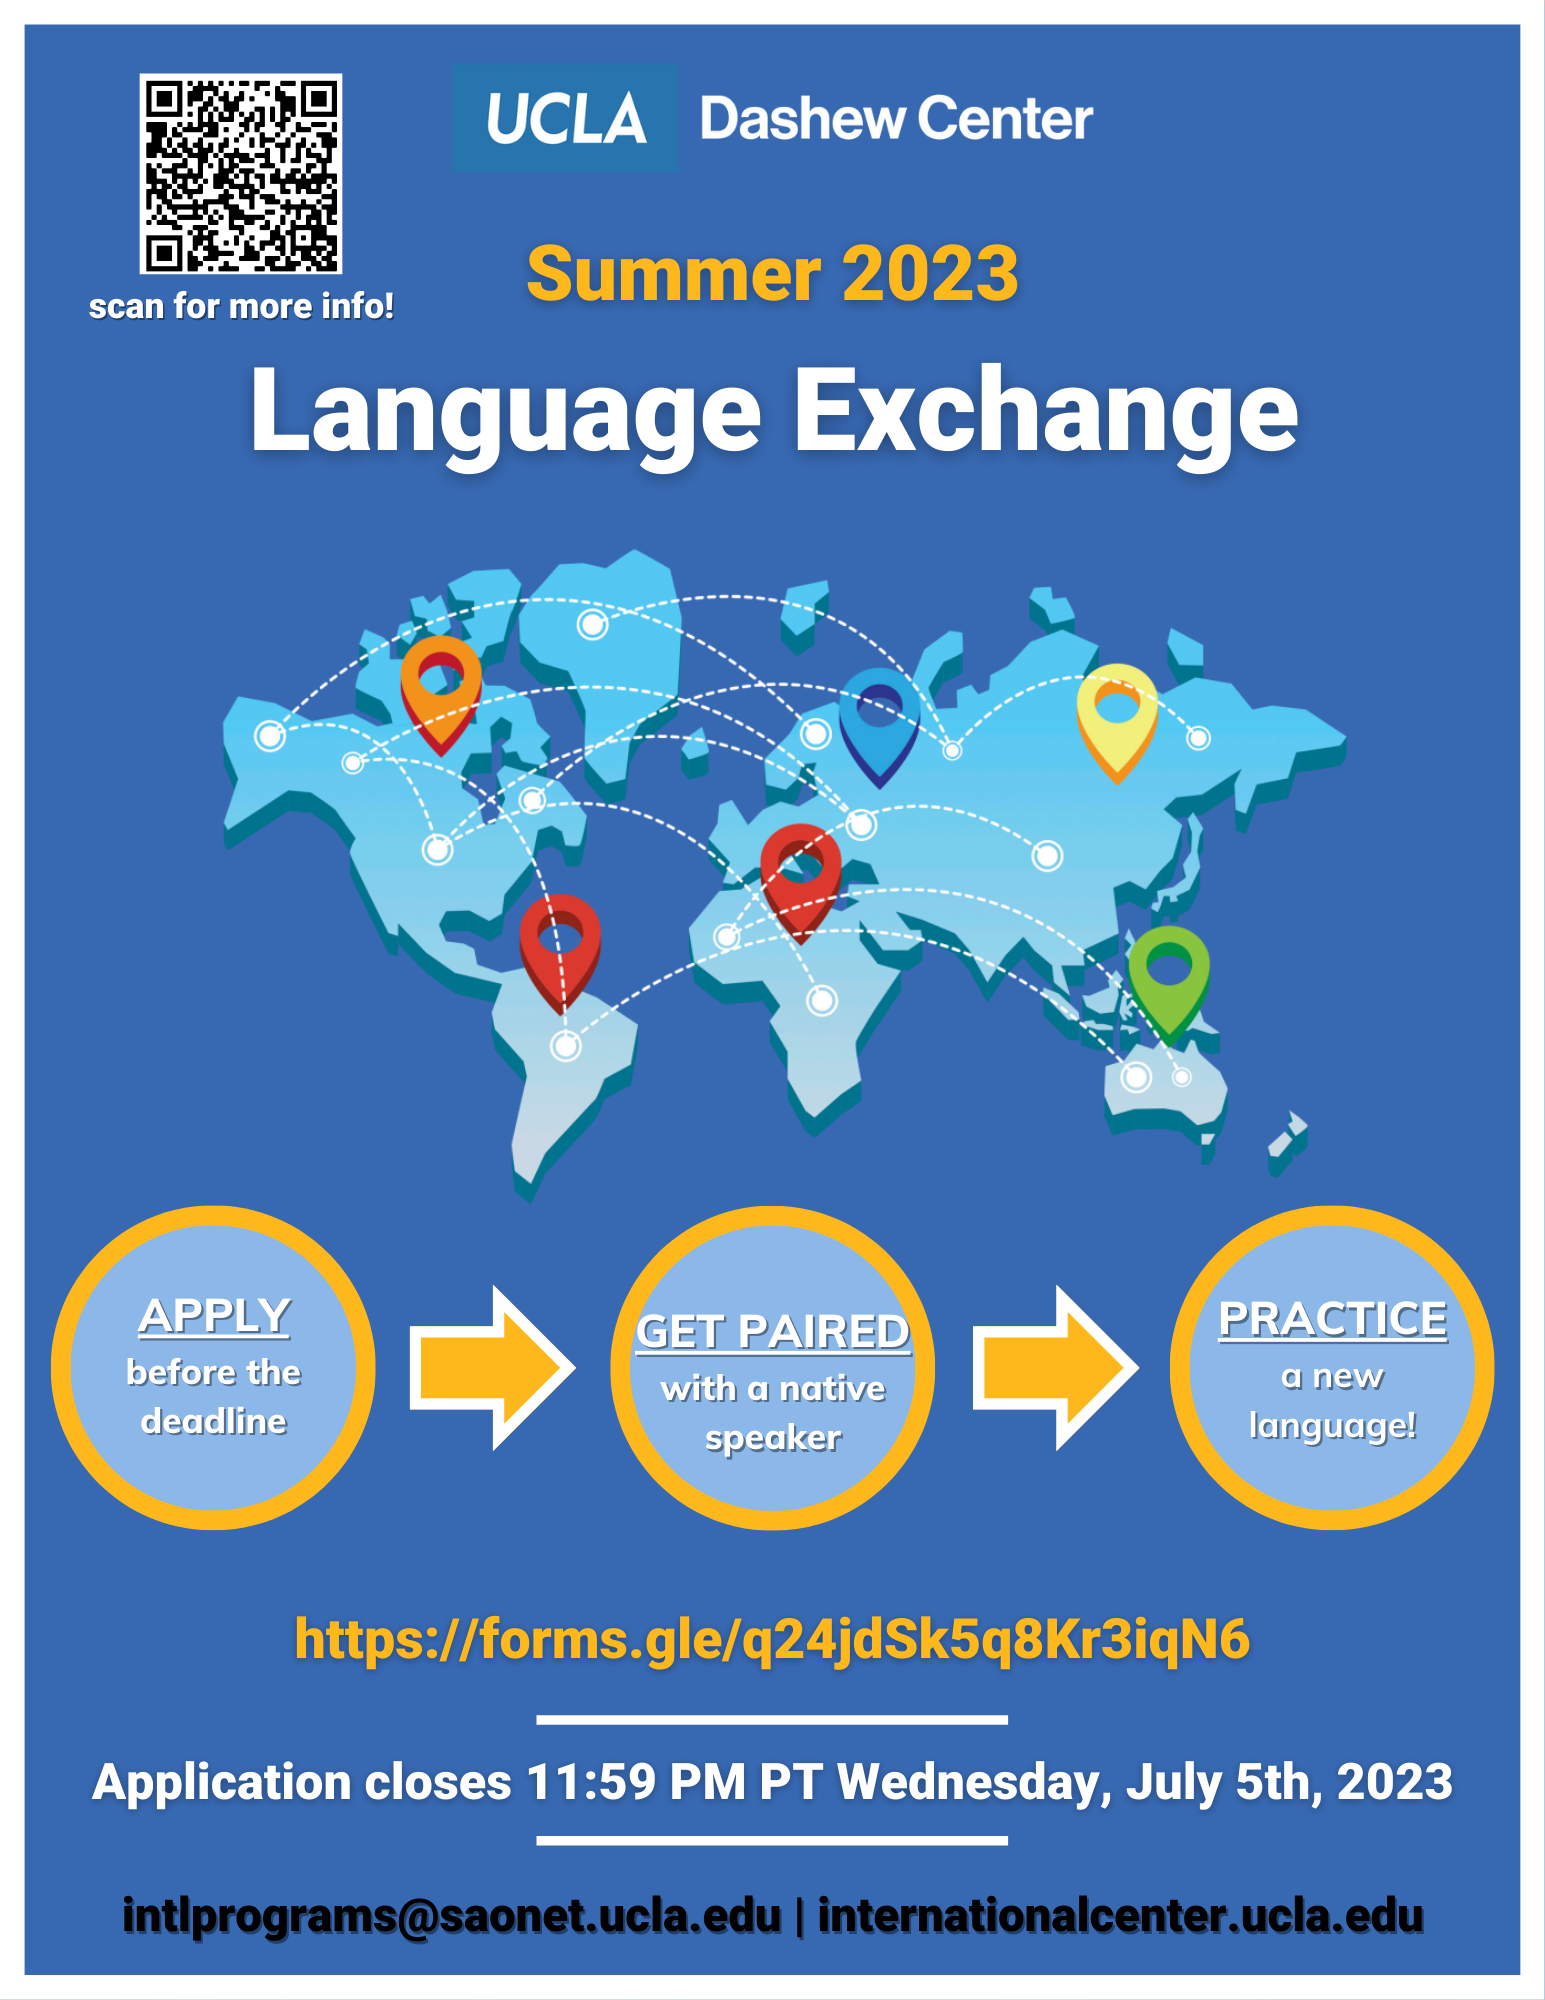 Summer 2023 Language Exchange flyer